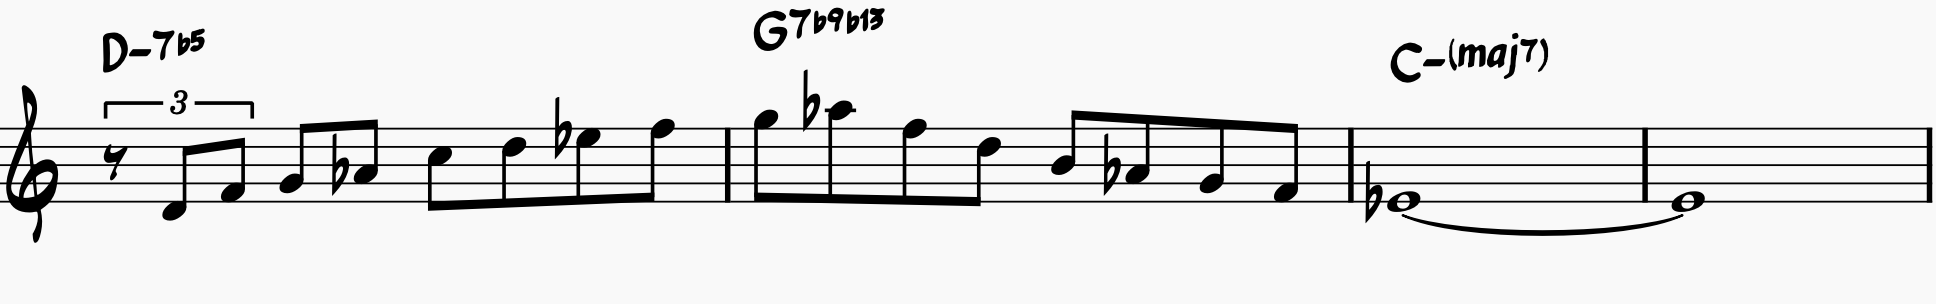 ii-V Harmonic Minor Line in C minor